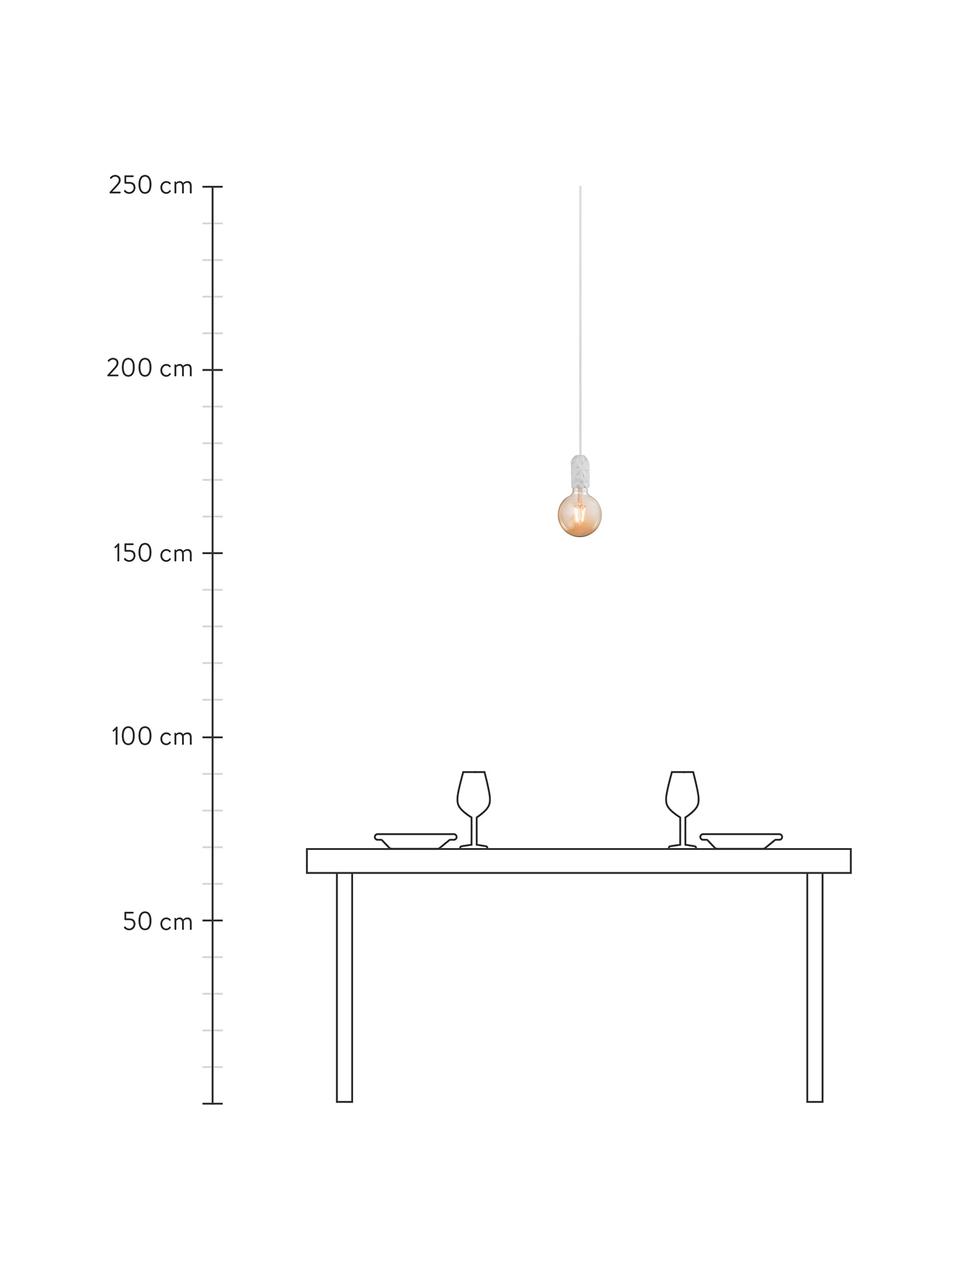 Kleine hanglamp Hang van porselein, Fitting: porselein, Wit, Ø 5 x H 9 cm